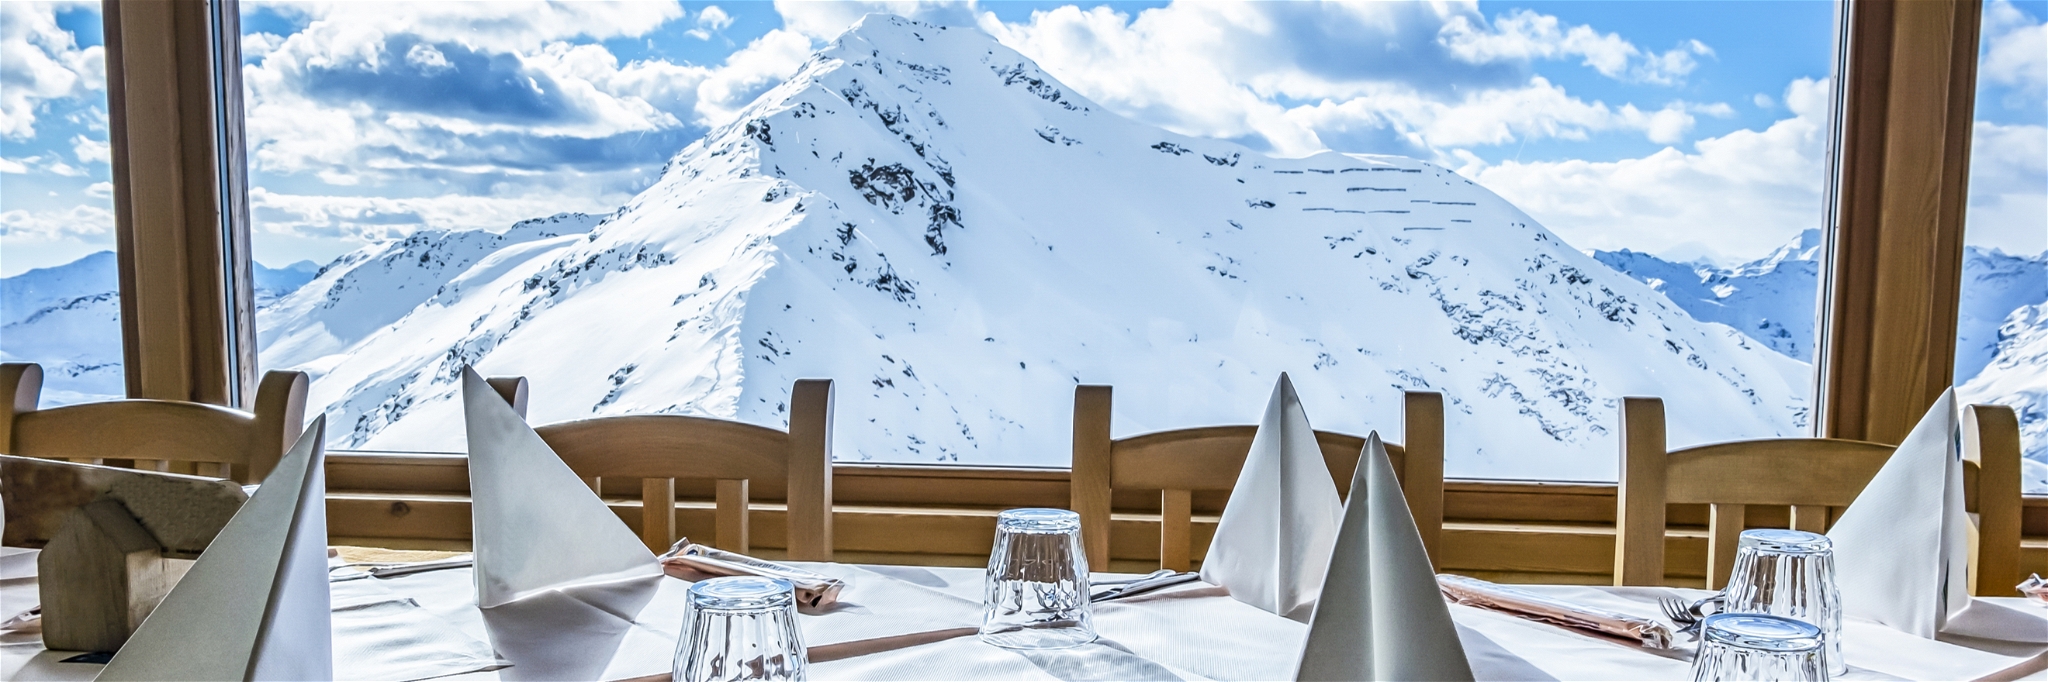 The best foodie ski resorts aren't hard to find.